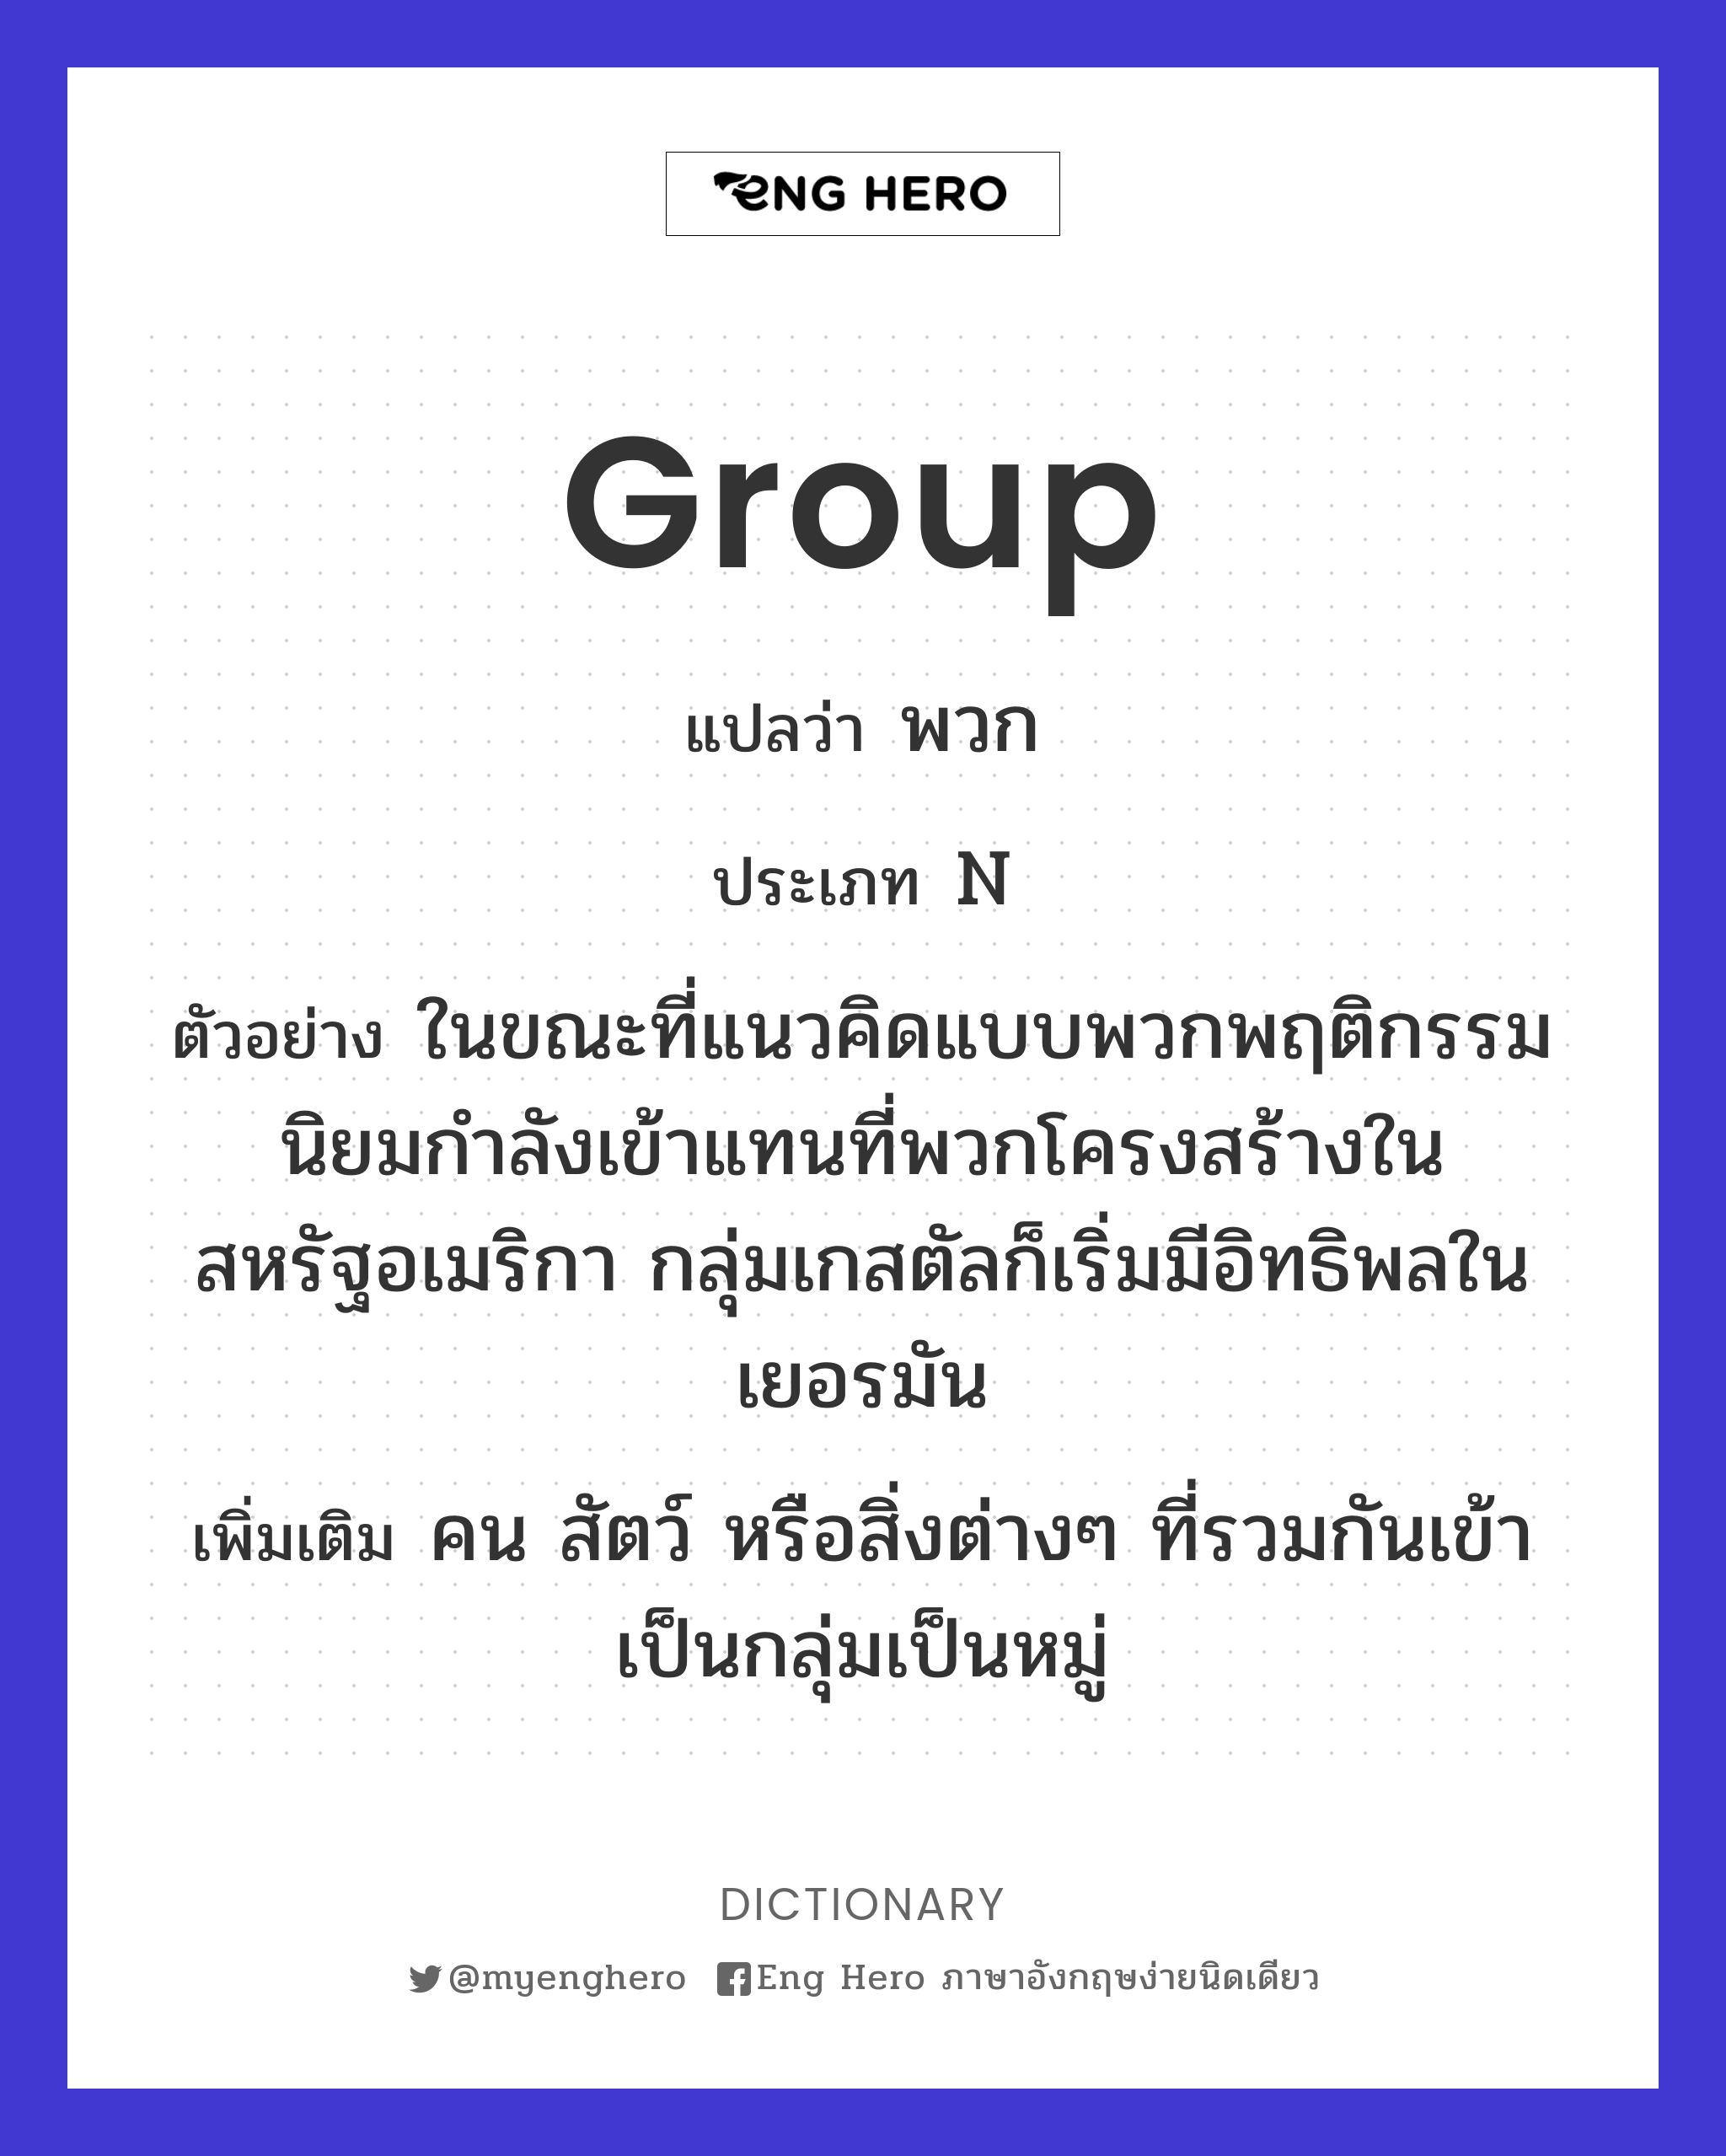 group